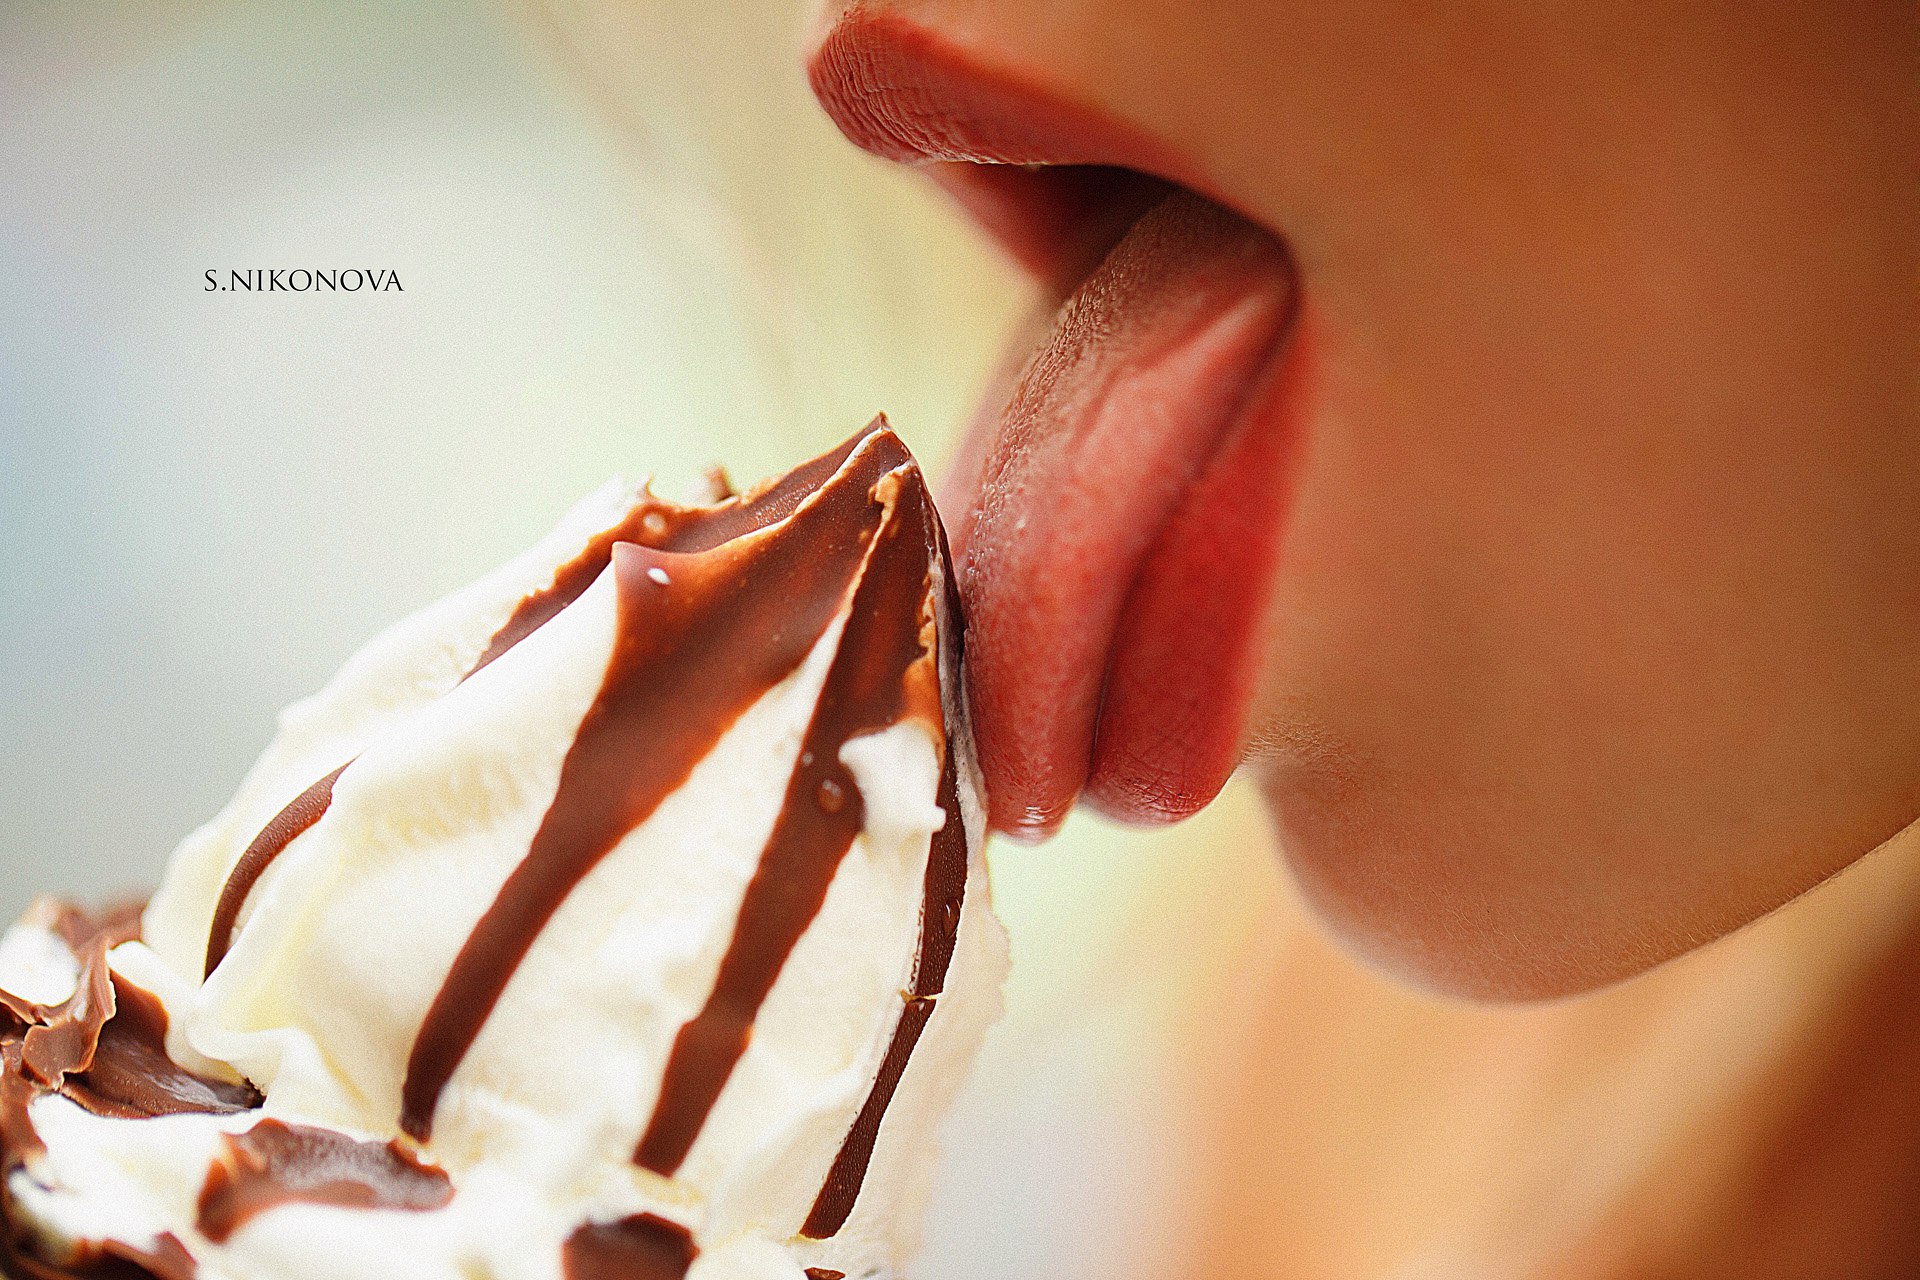 People 1920x1280 Svetlana Semanina women tongues licking ice cream mouth food phallic symbol juicy lips suggestive